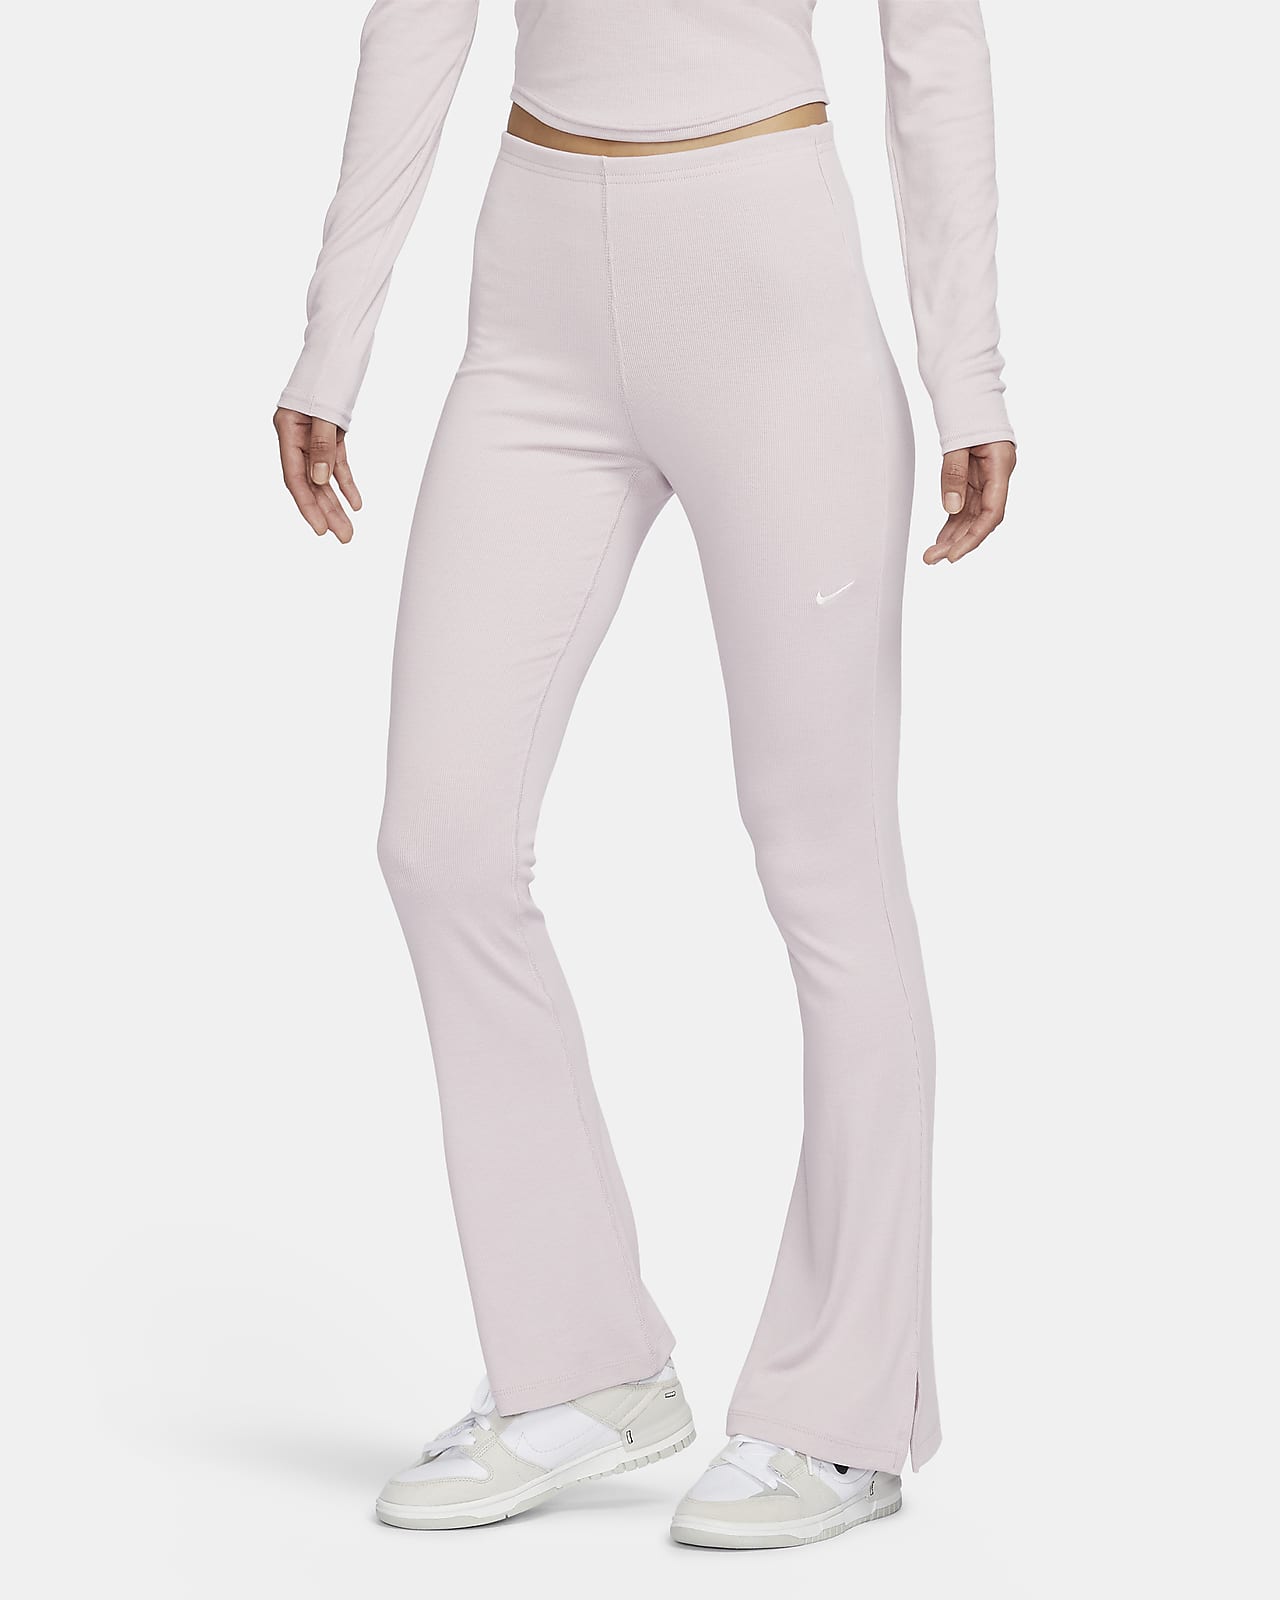 Buy Yvette Bell Bottom Pants for Women Flare Leggings High Waist Wide Leg  Bootcut Yoga Pants Tummy Control for Dancing at Amazon.in